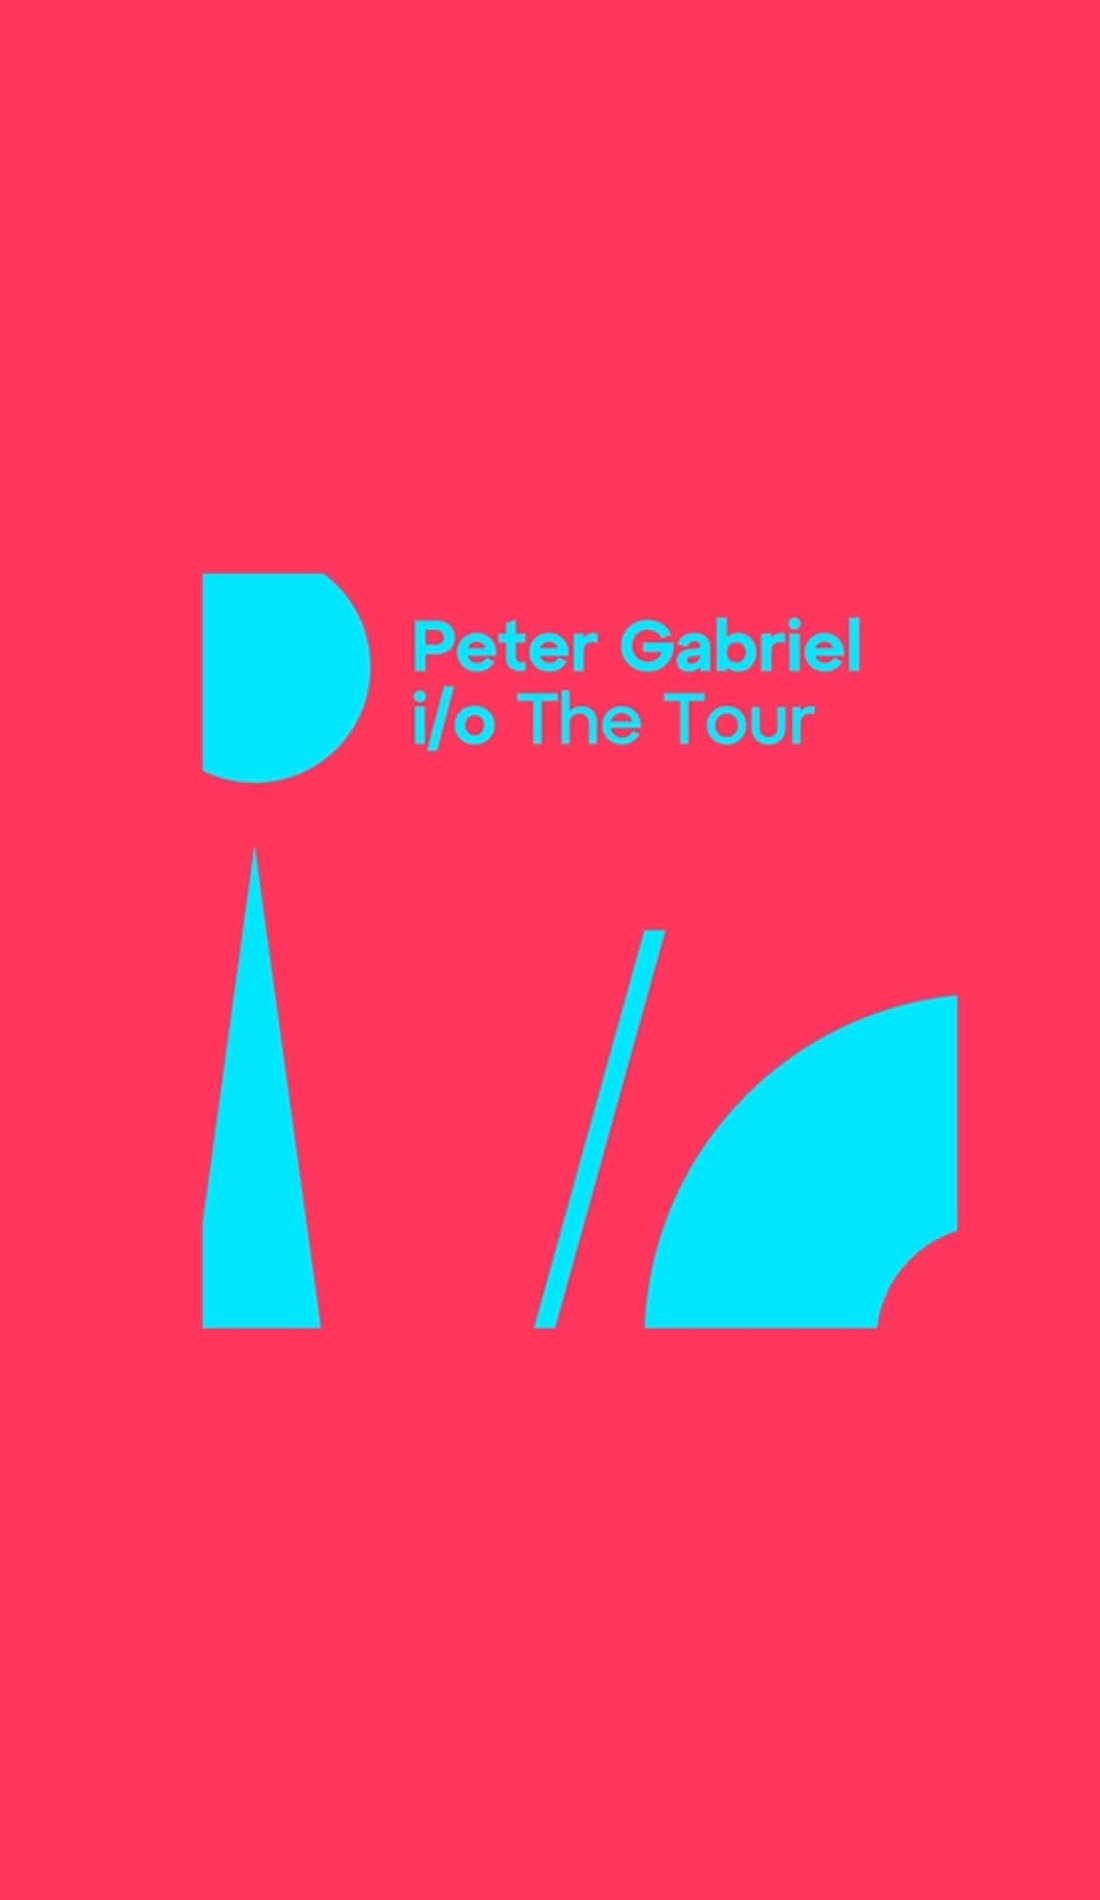 A Peter Gabriel live event